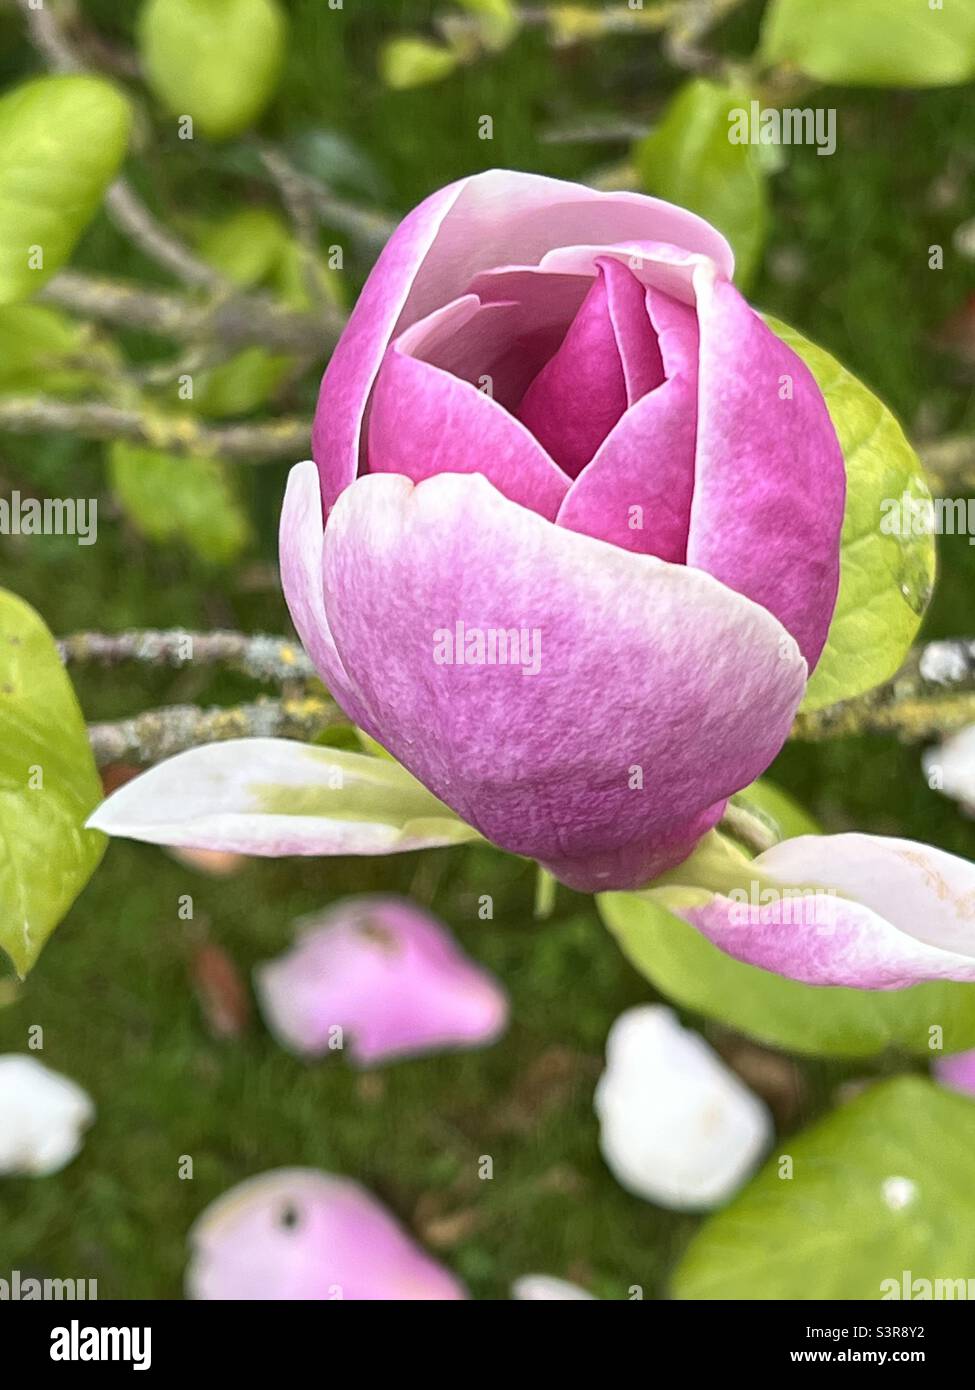 Magnolia in flower Stock Photo